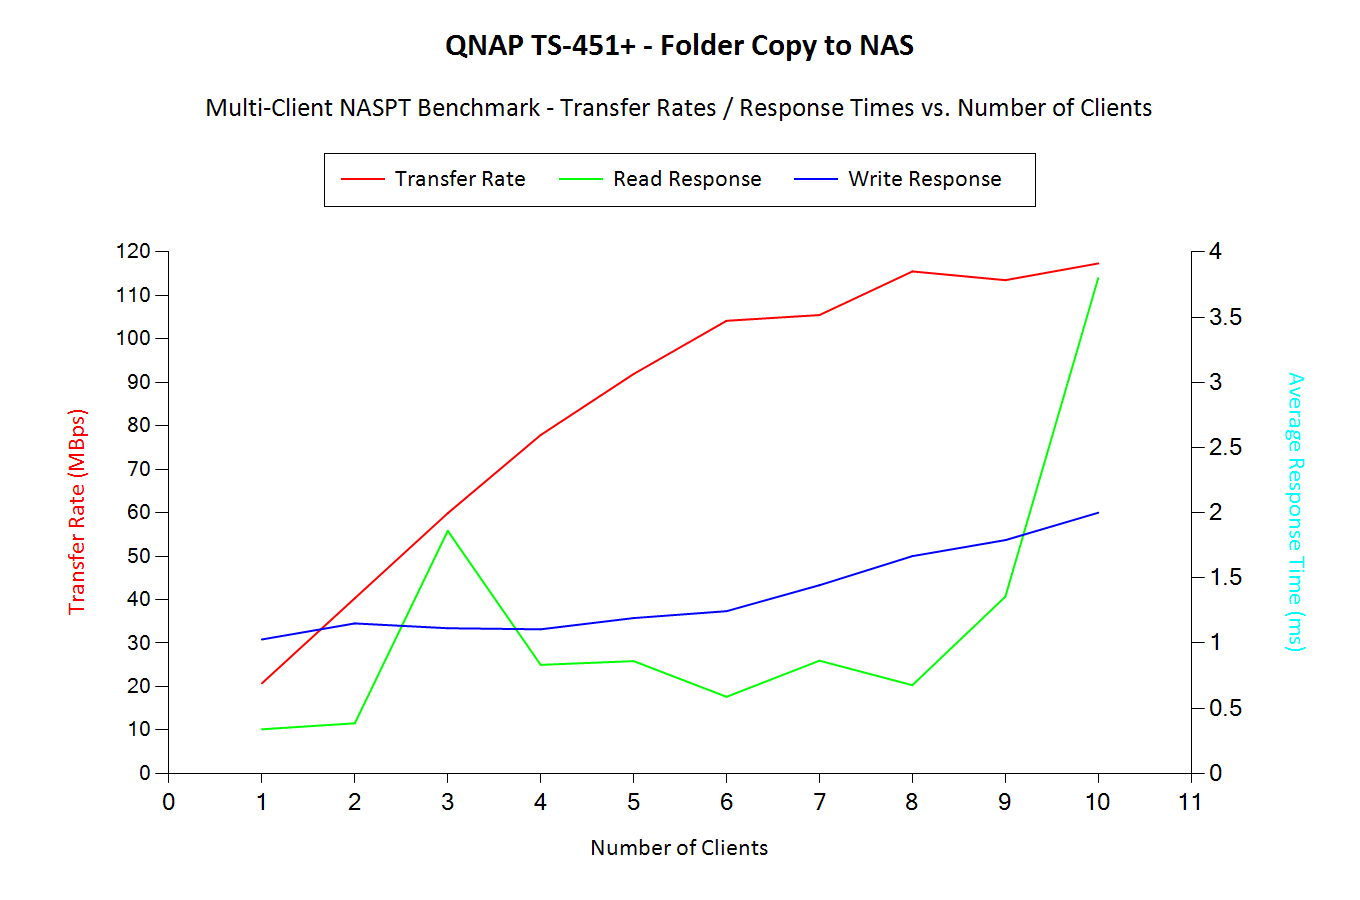 Folder Copy to NAS - Multi-Client Benchmark